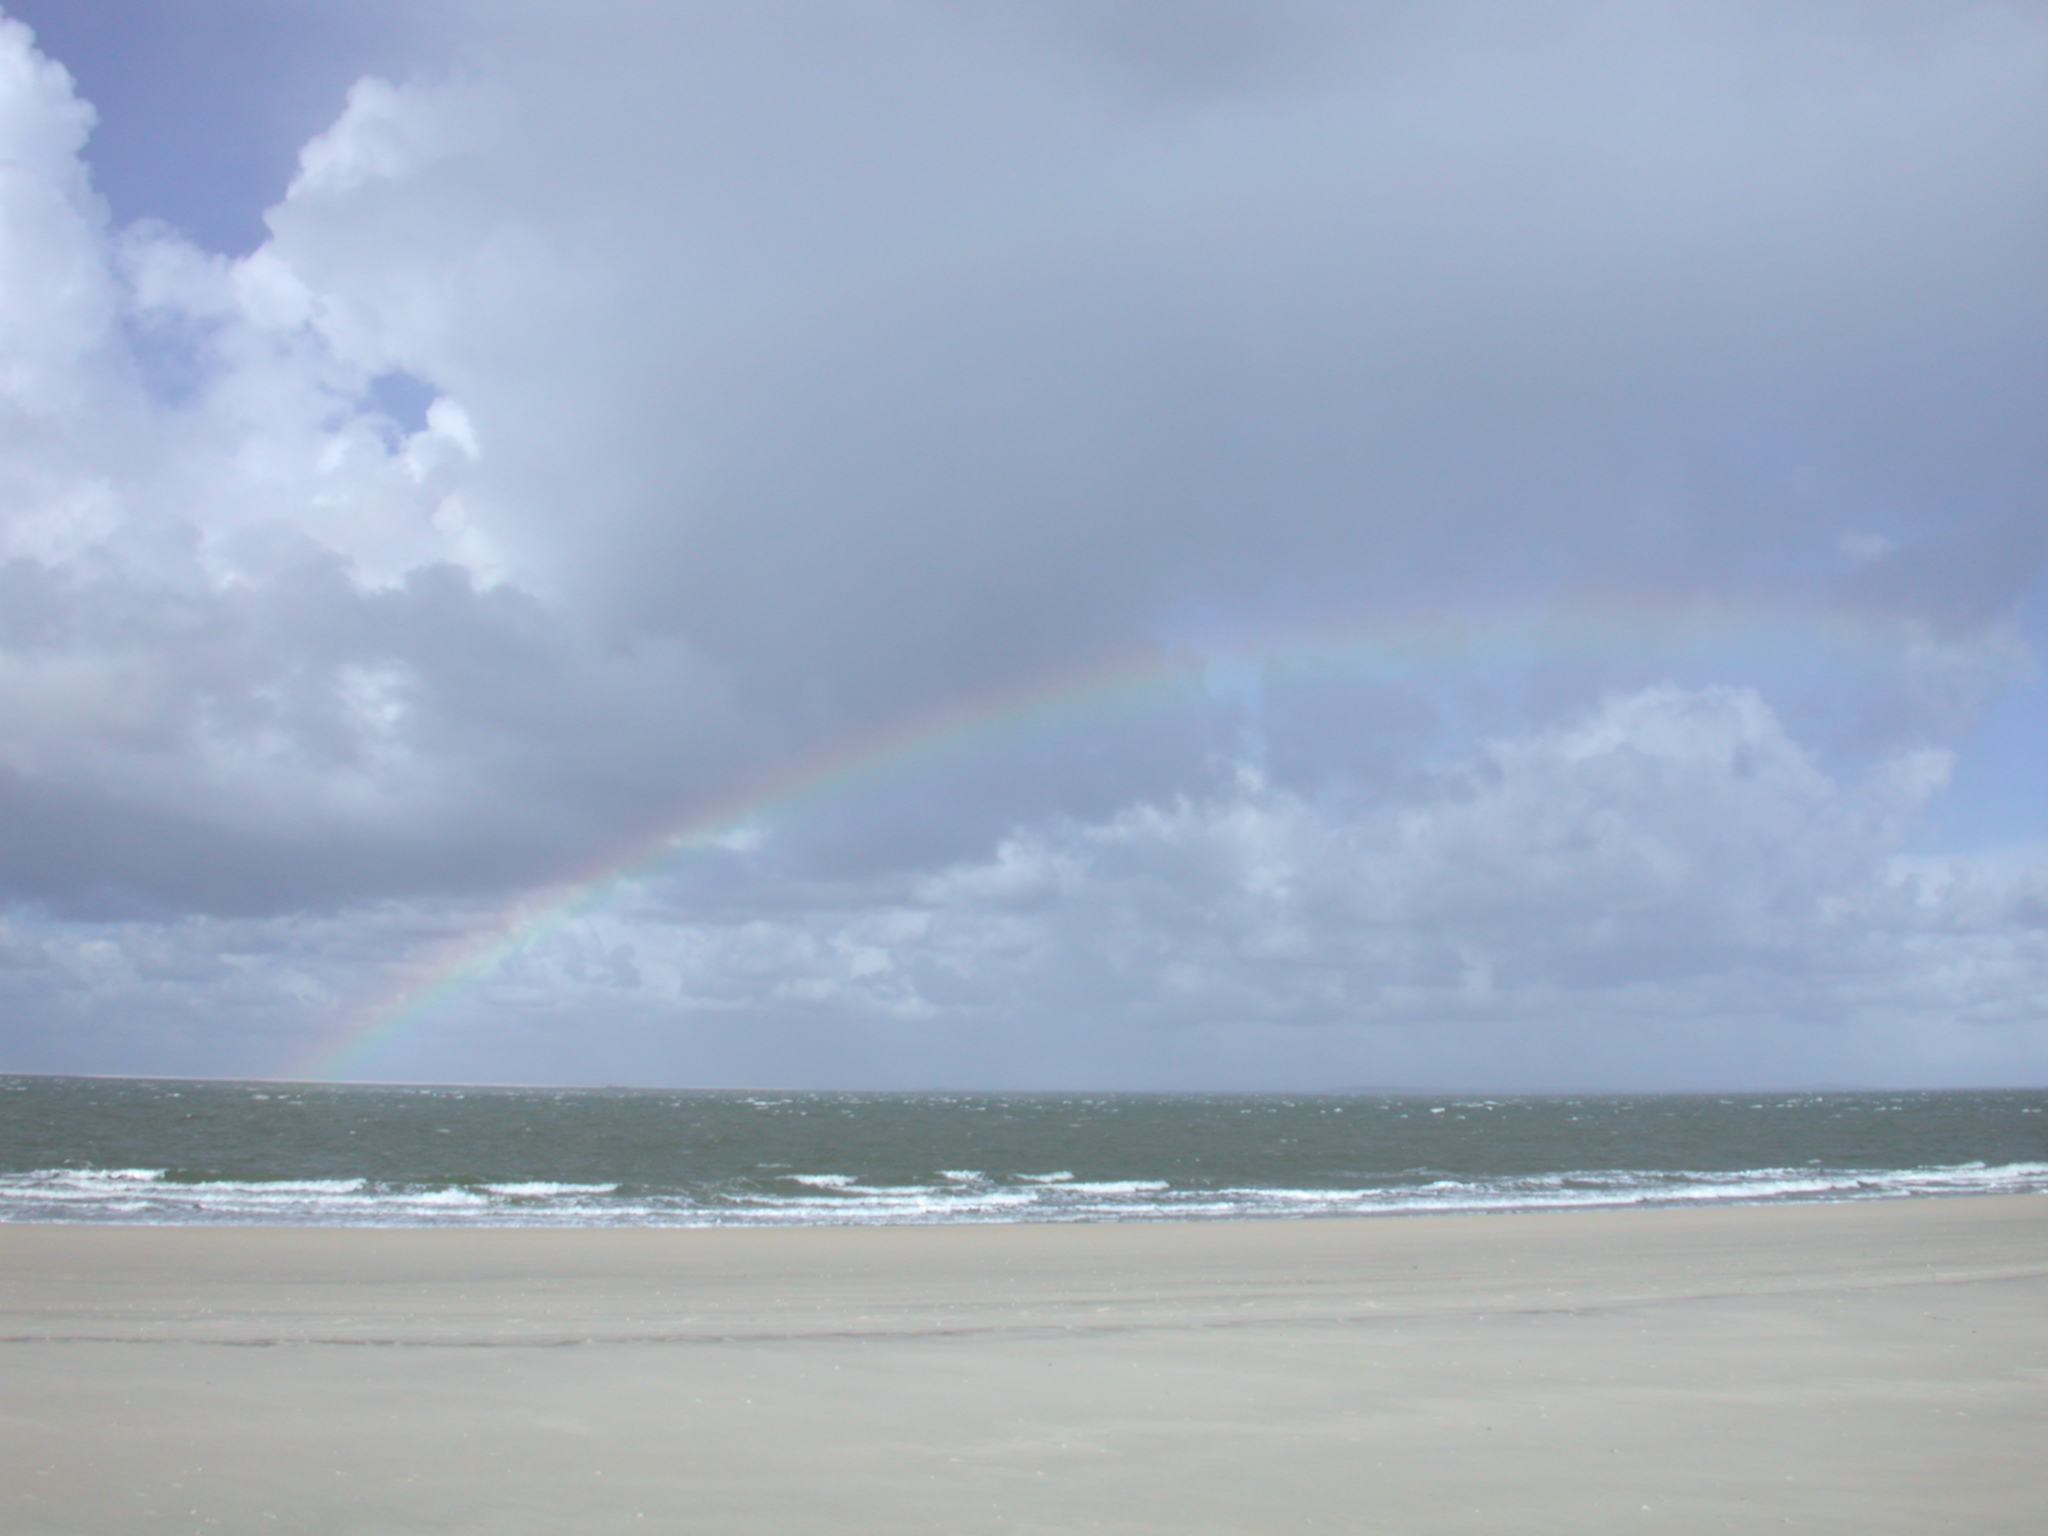 beach cold day waves breaking surf rainbow panorama horizon sea ocean